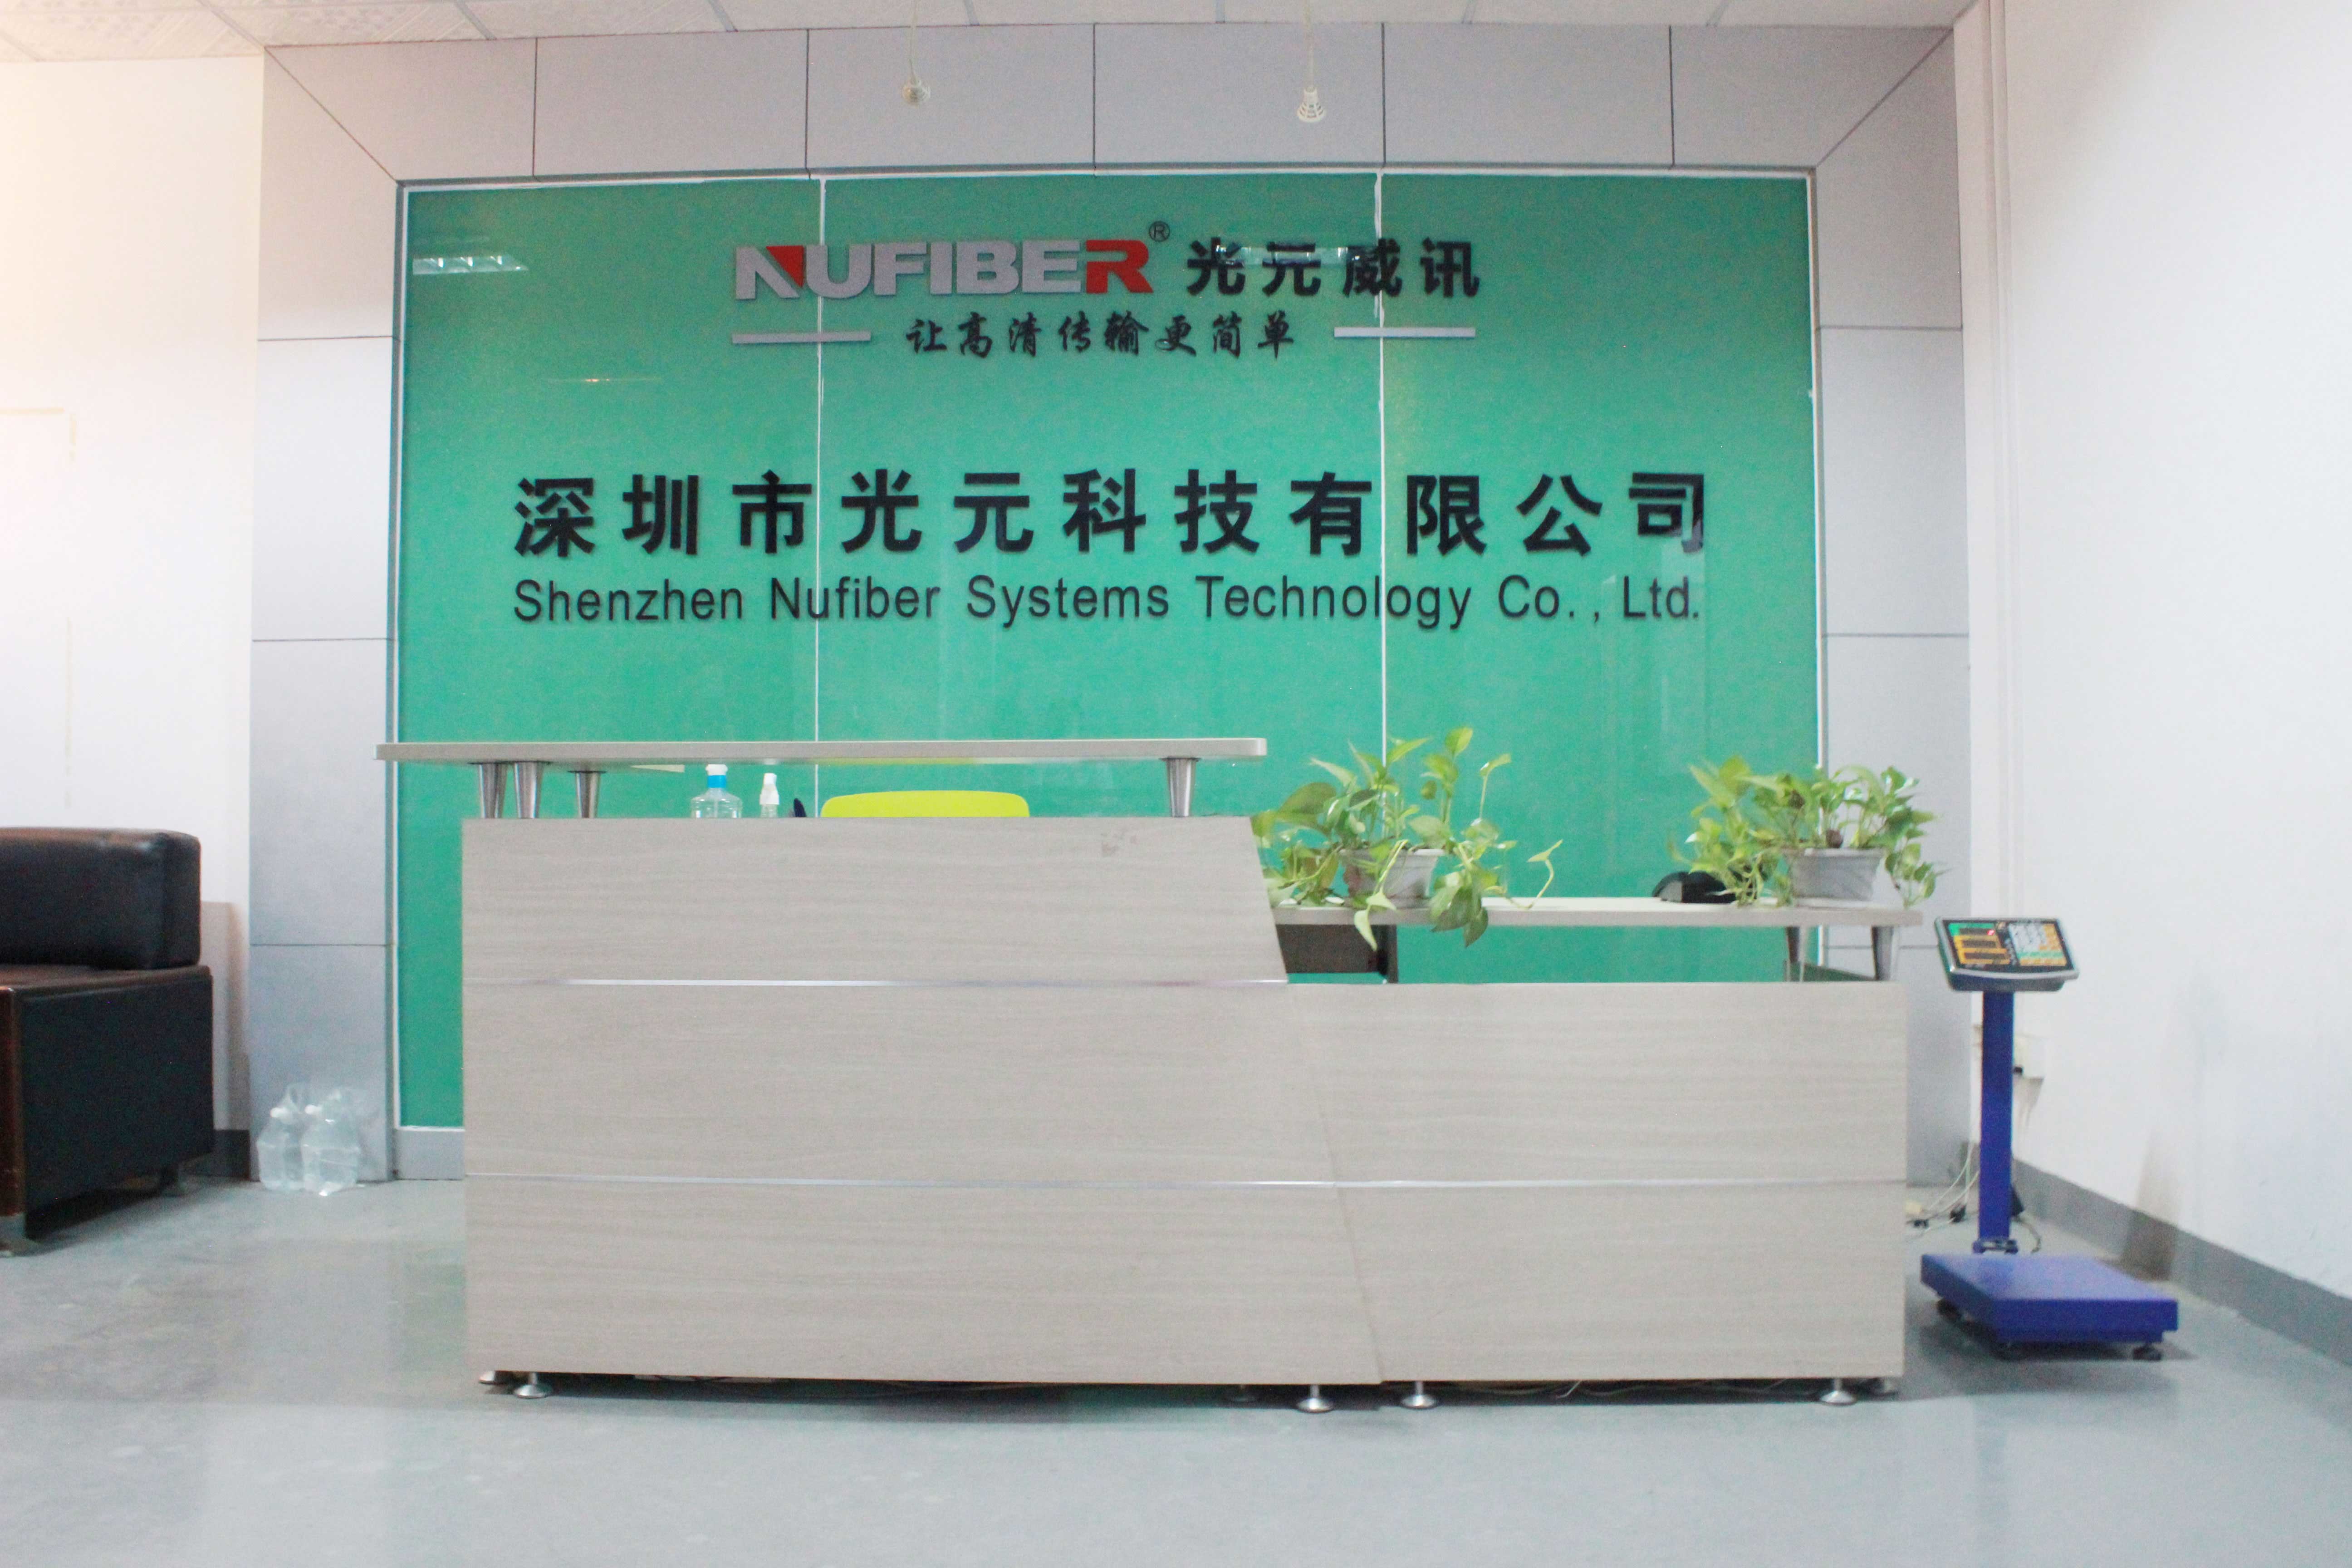 Porcellana Shenzhen Nufiber Systems Technology Co., Ltd. Profilo Aziendale